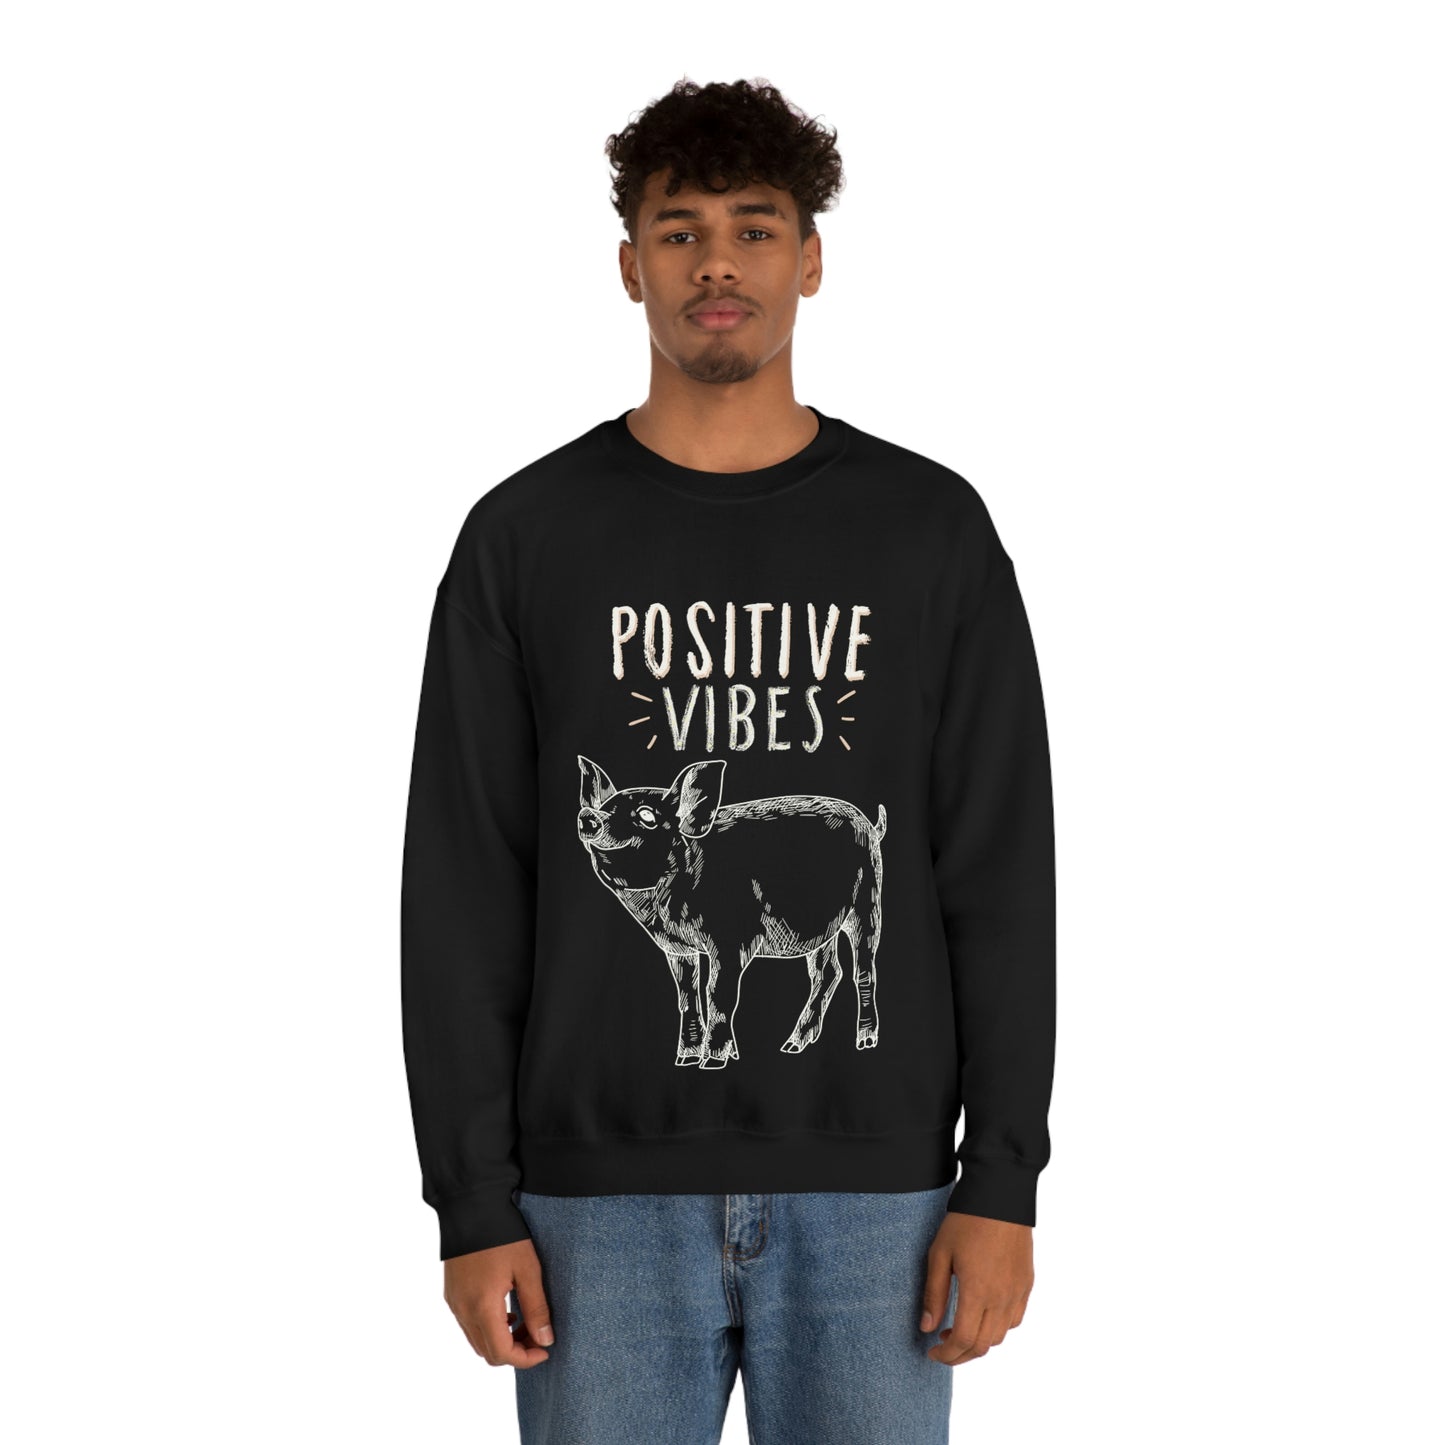 "Positive Vibes" logo with Cute PIG Graphic Crewneck Sweatshirt